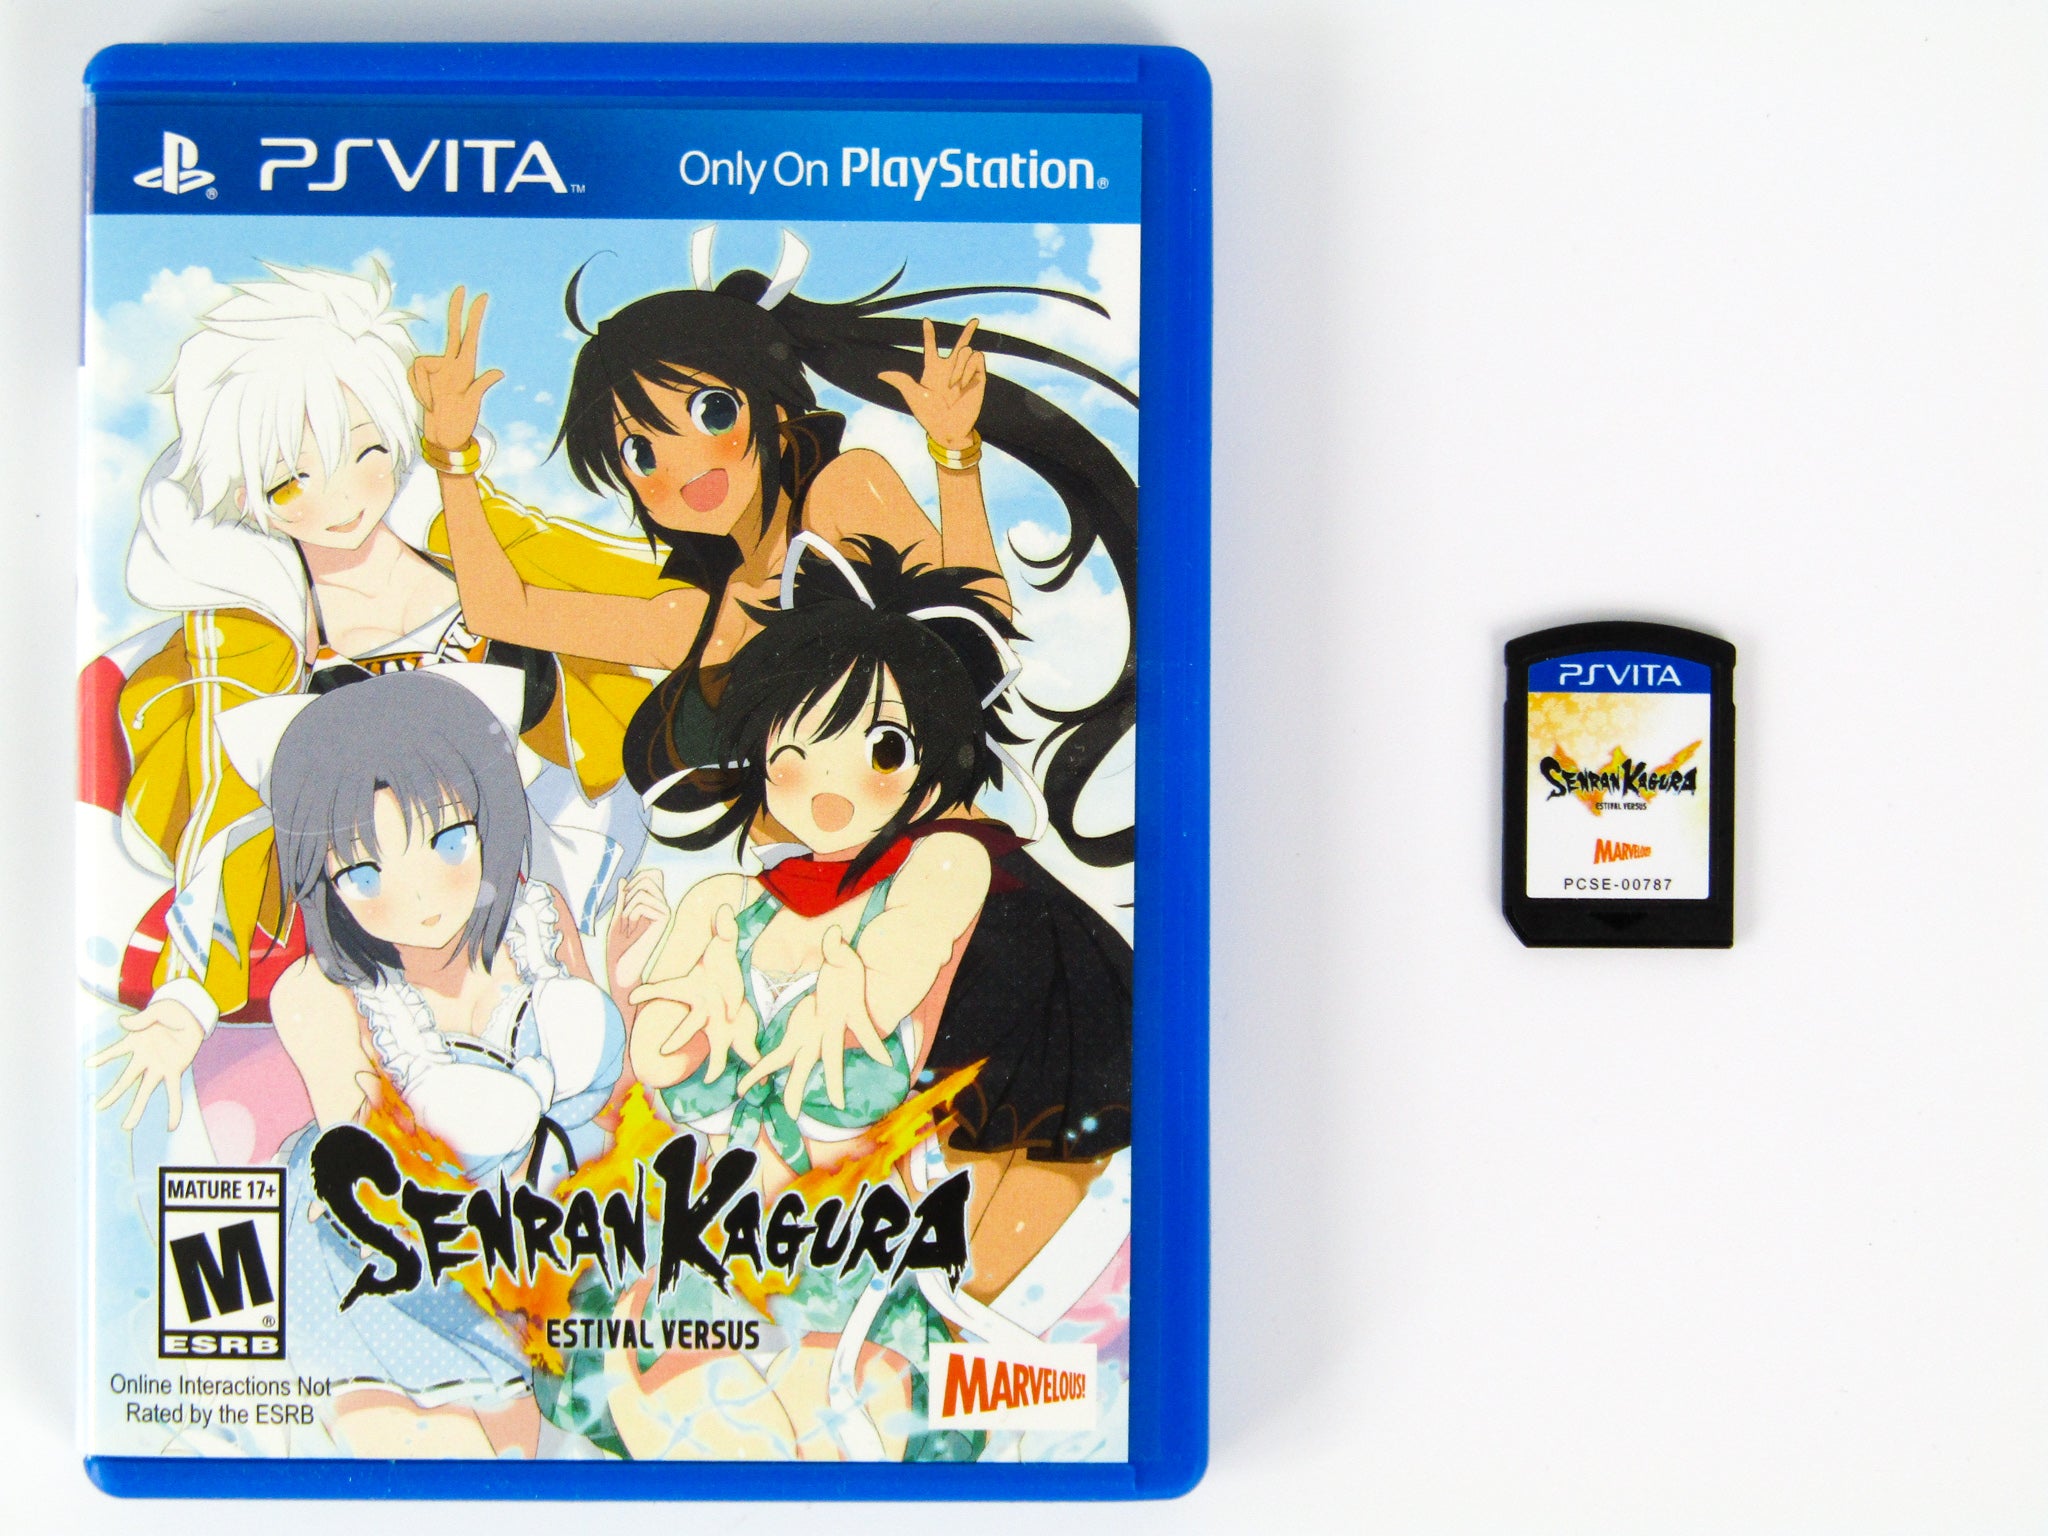 Buy PlayStation Vita Senran Kagura: Shinovi Versus Game Only